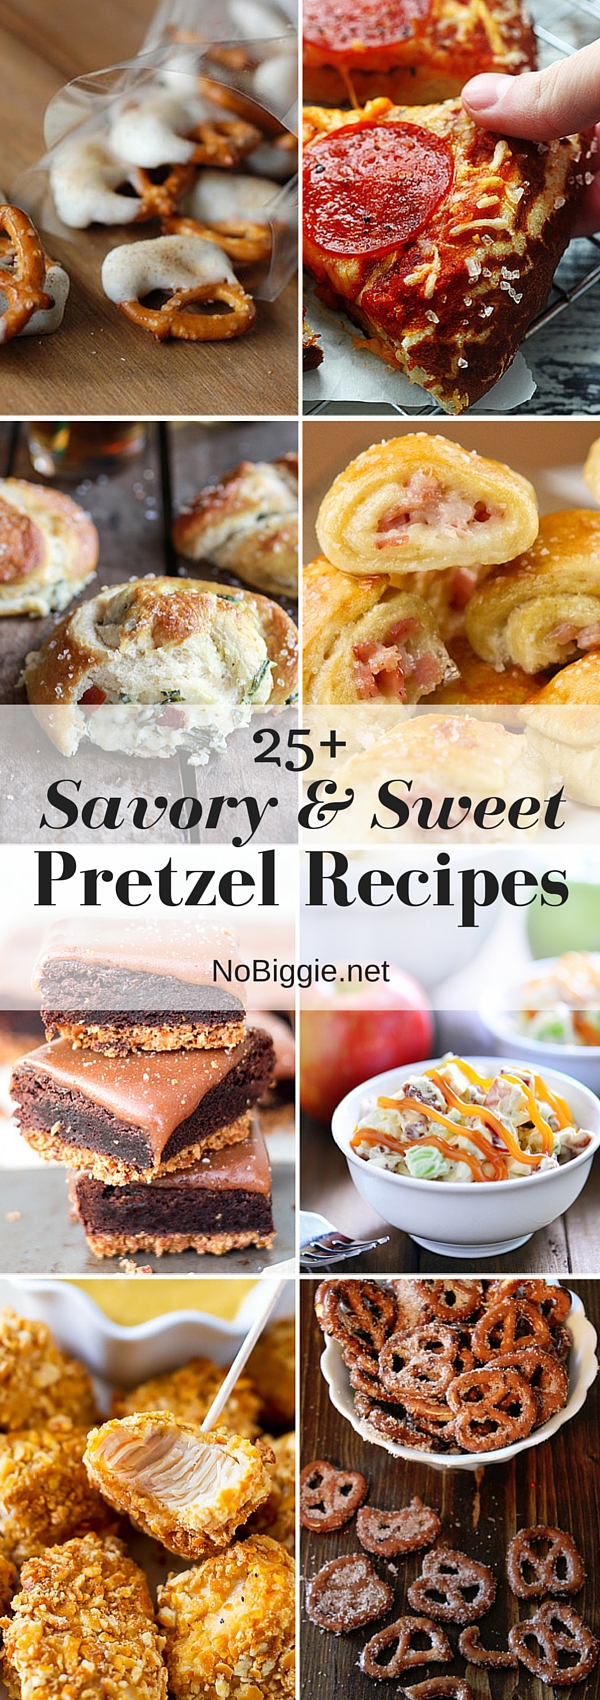 http://www.nobiggie.net/wp-content/uploads/2016/02/25-Savory-Sweet-Pretzel-Recipes-NoBiggie.net-vrt.jpg